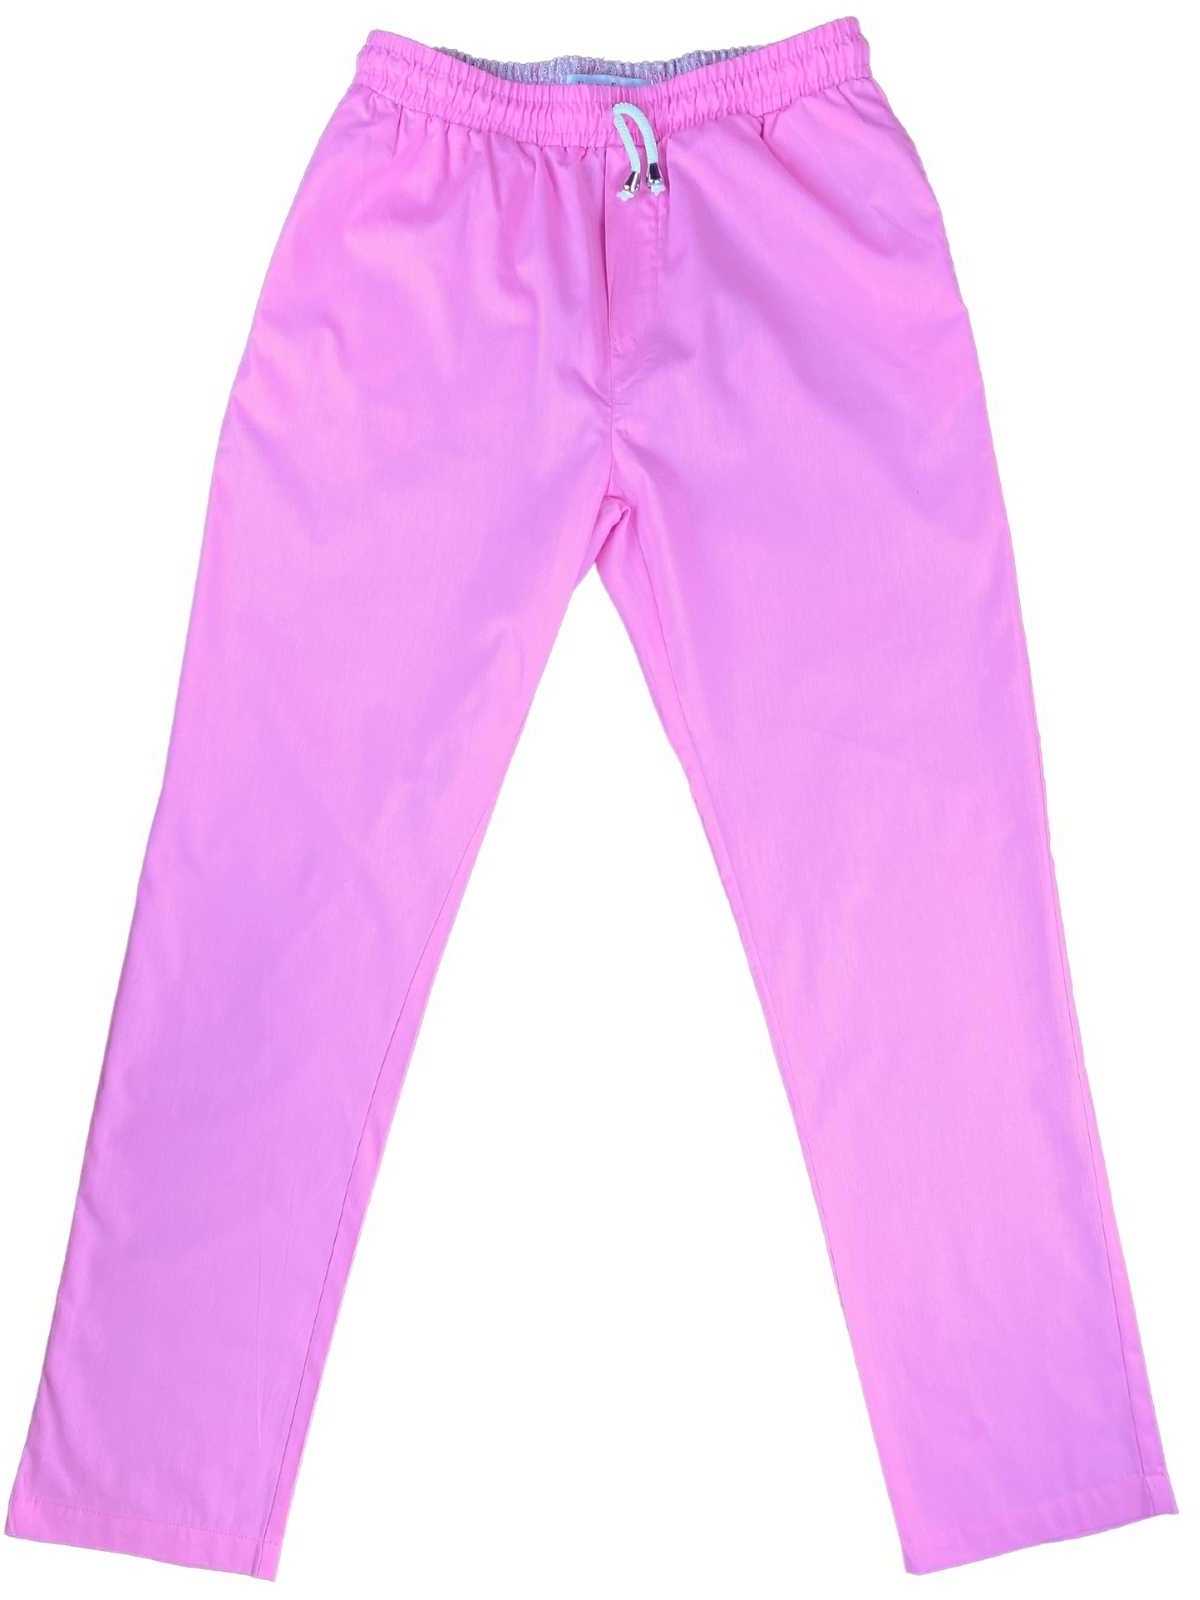 Hot Pink Cotton Lounge Pant